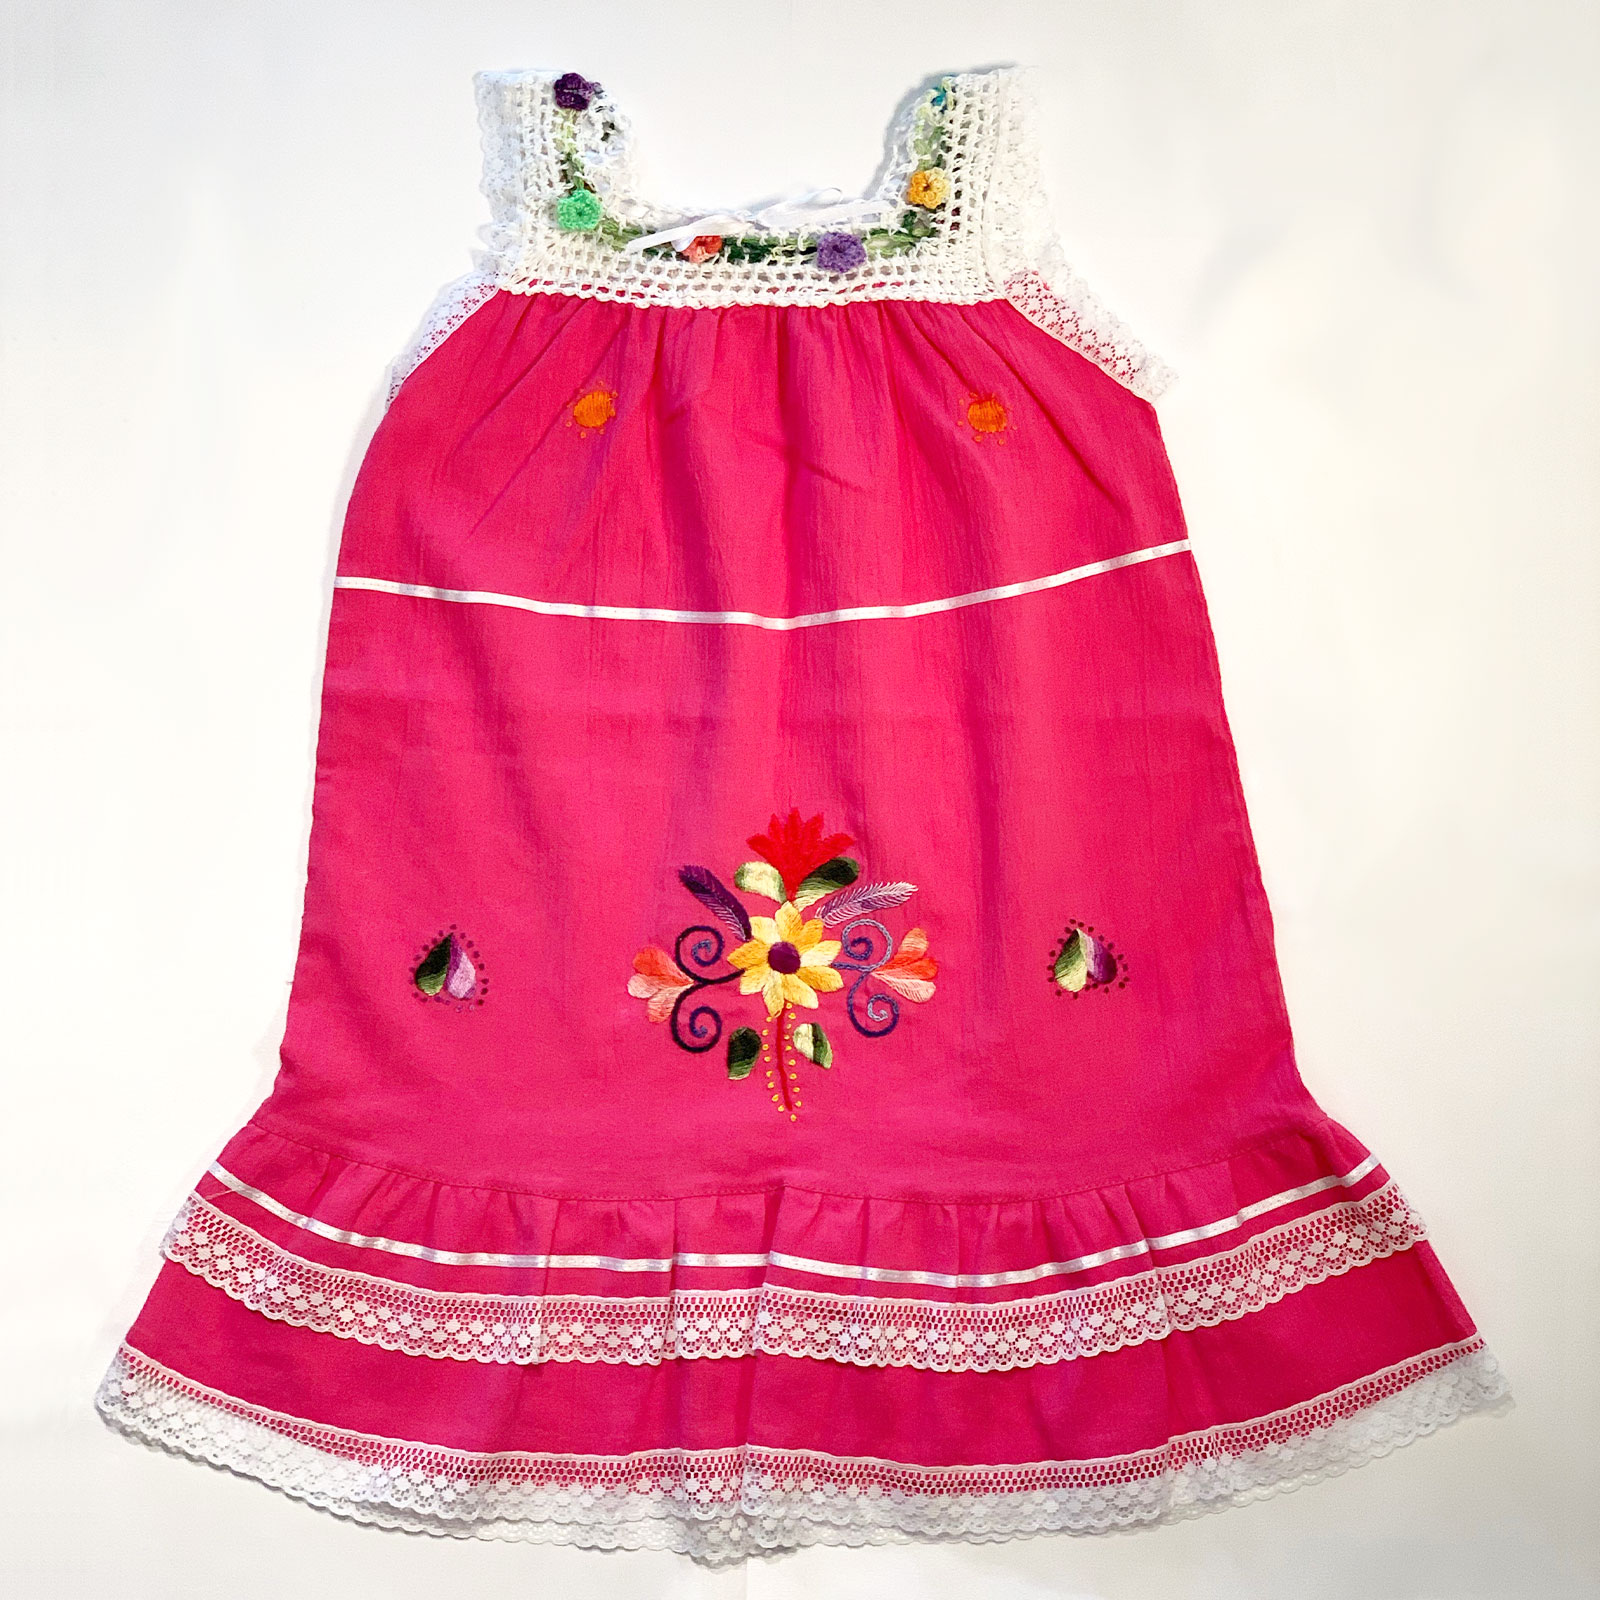 Little Girl Dresses from Around the World | Llama Kids